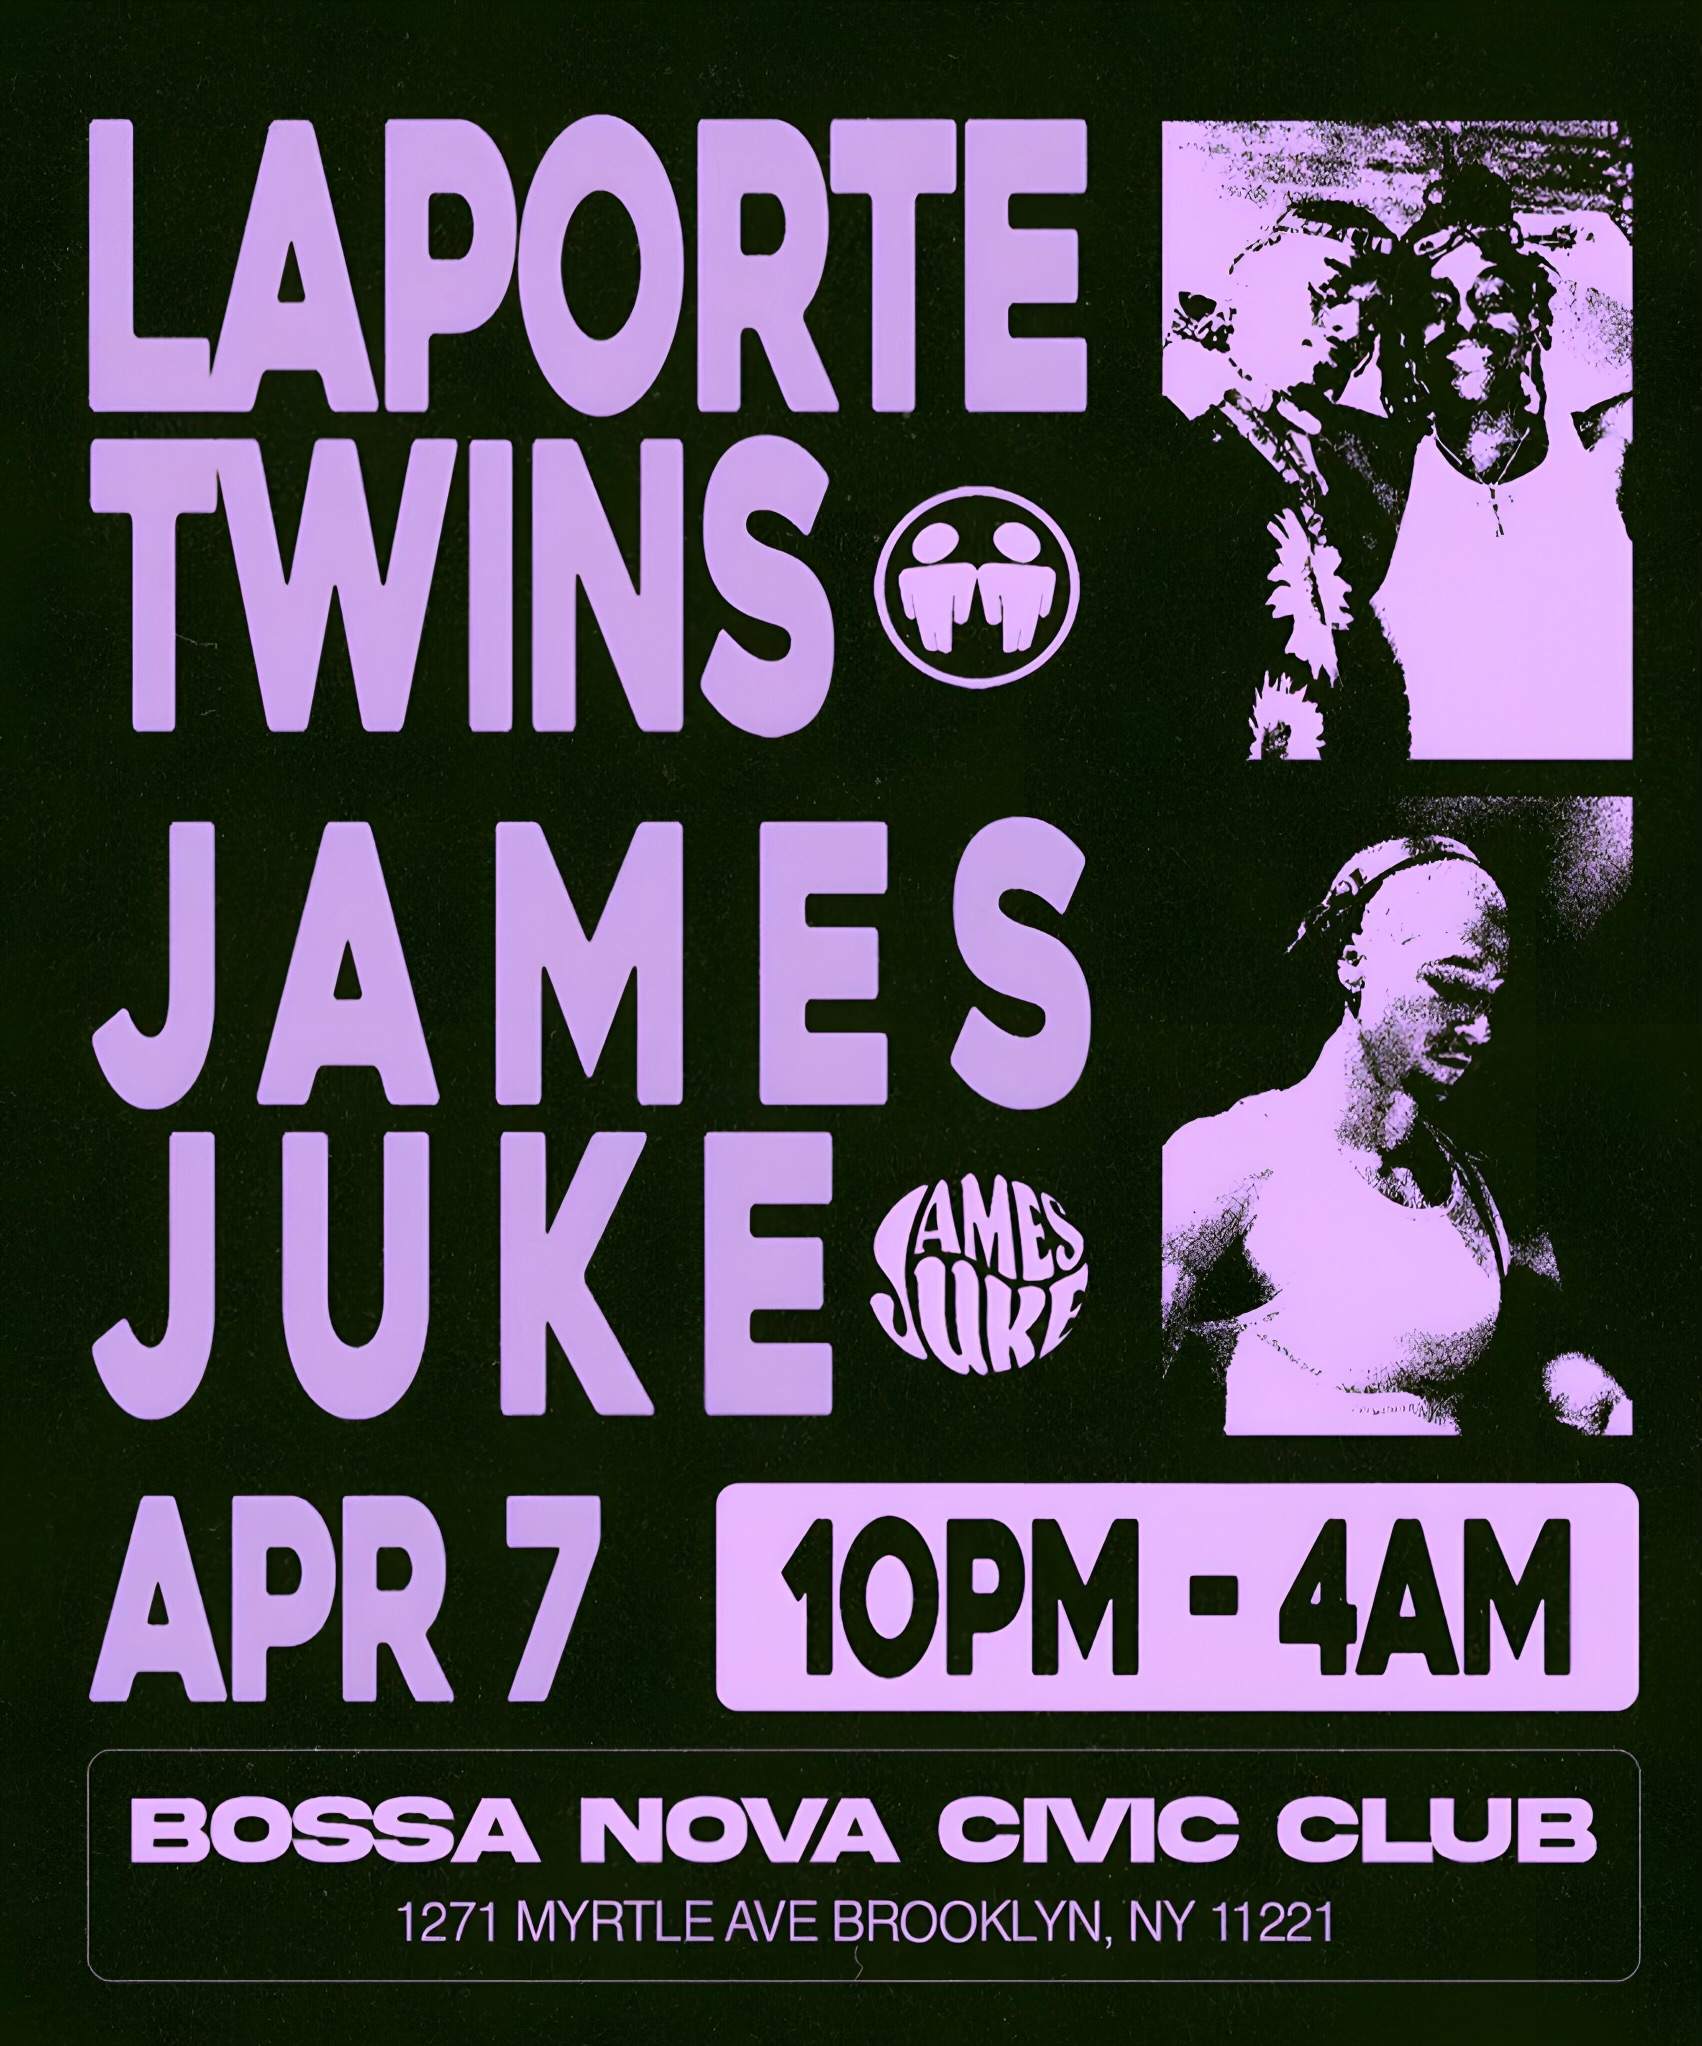 LAPORTE TWINS @ Bossa Nova Civic Club - フライヤー表